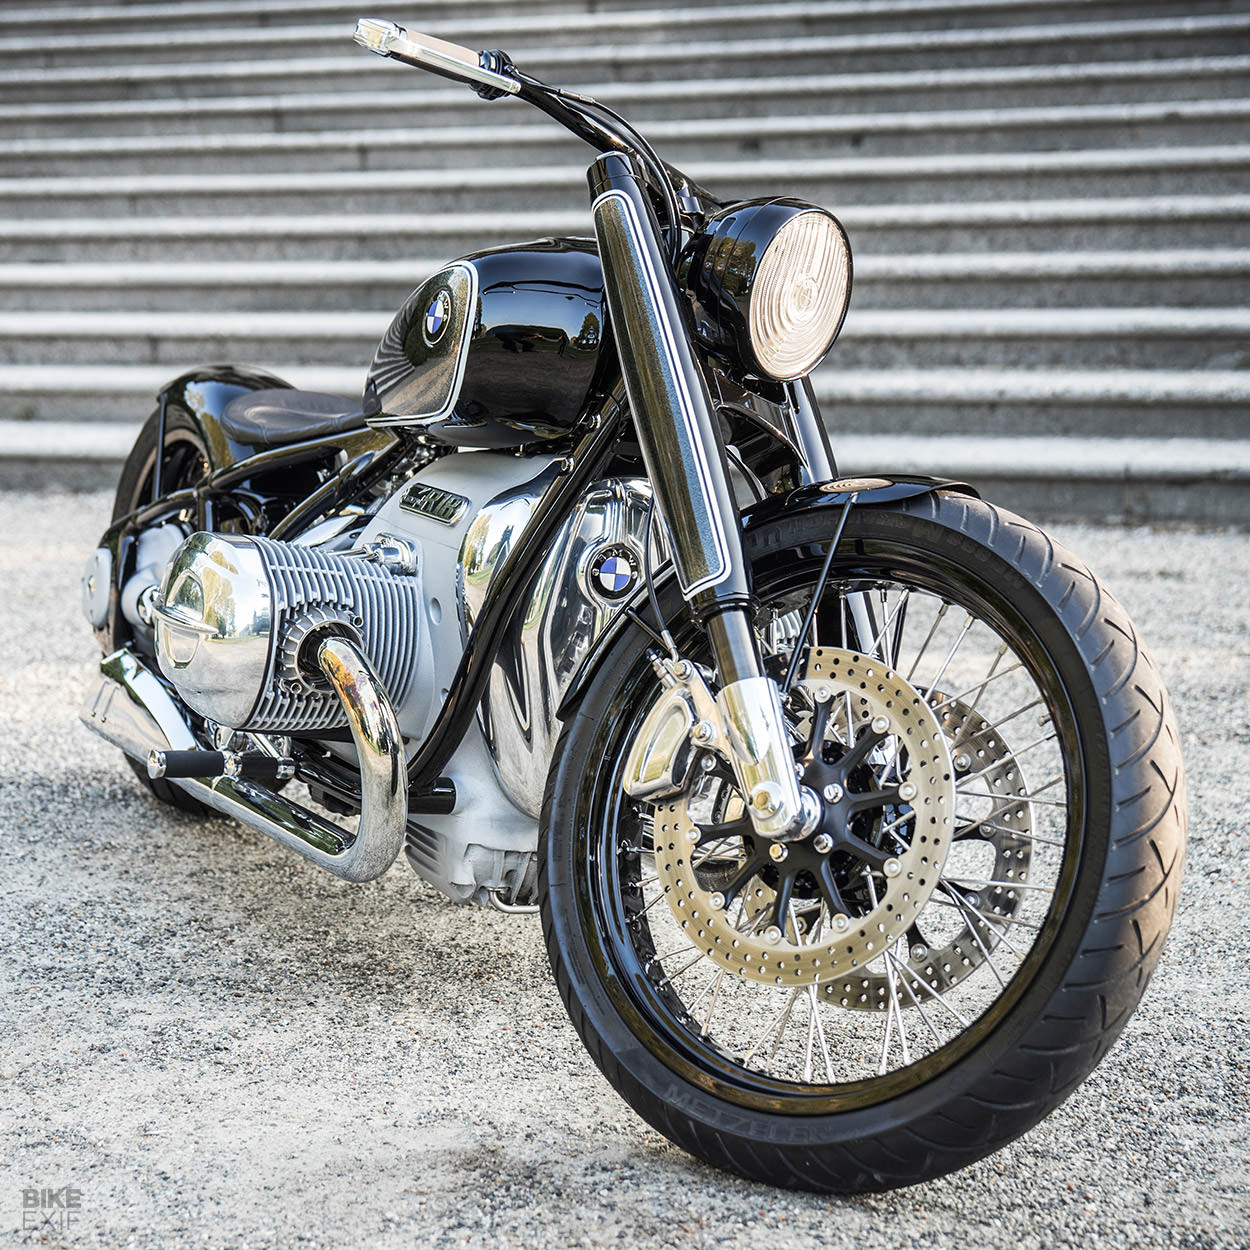 The BMW Concept R18 motorcycle, star of the 2019 Concorso d'Eleganza at Villa d'Este